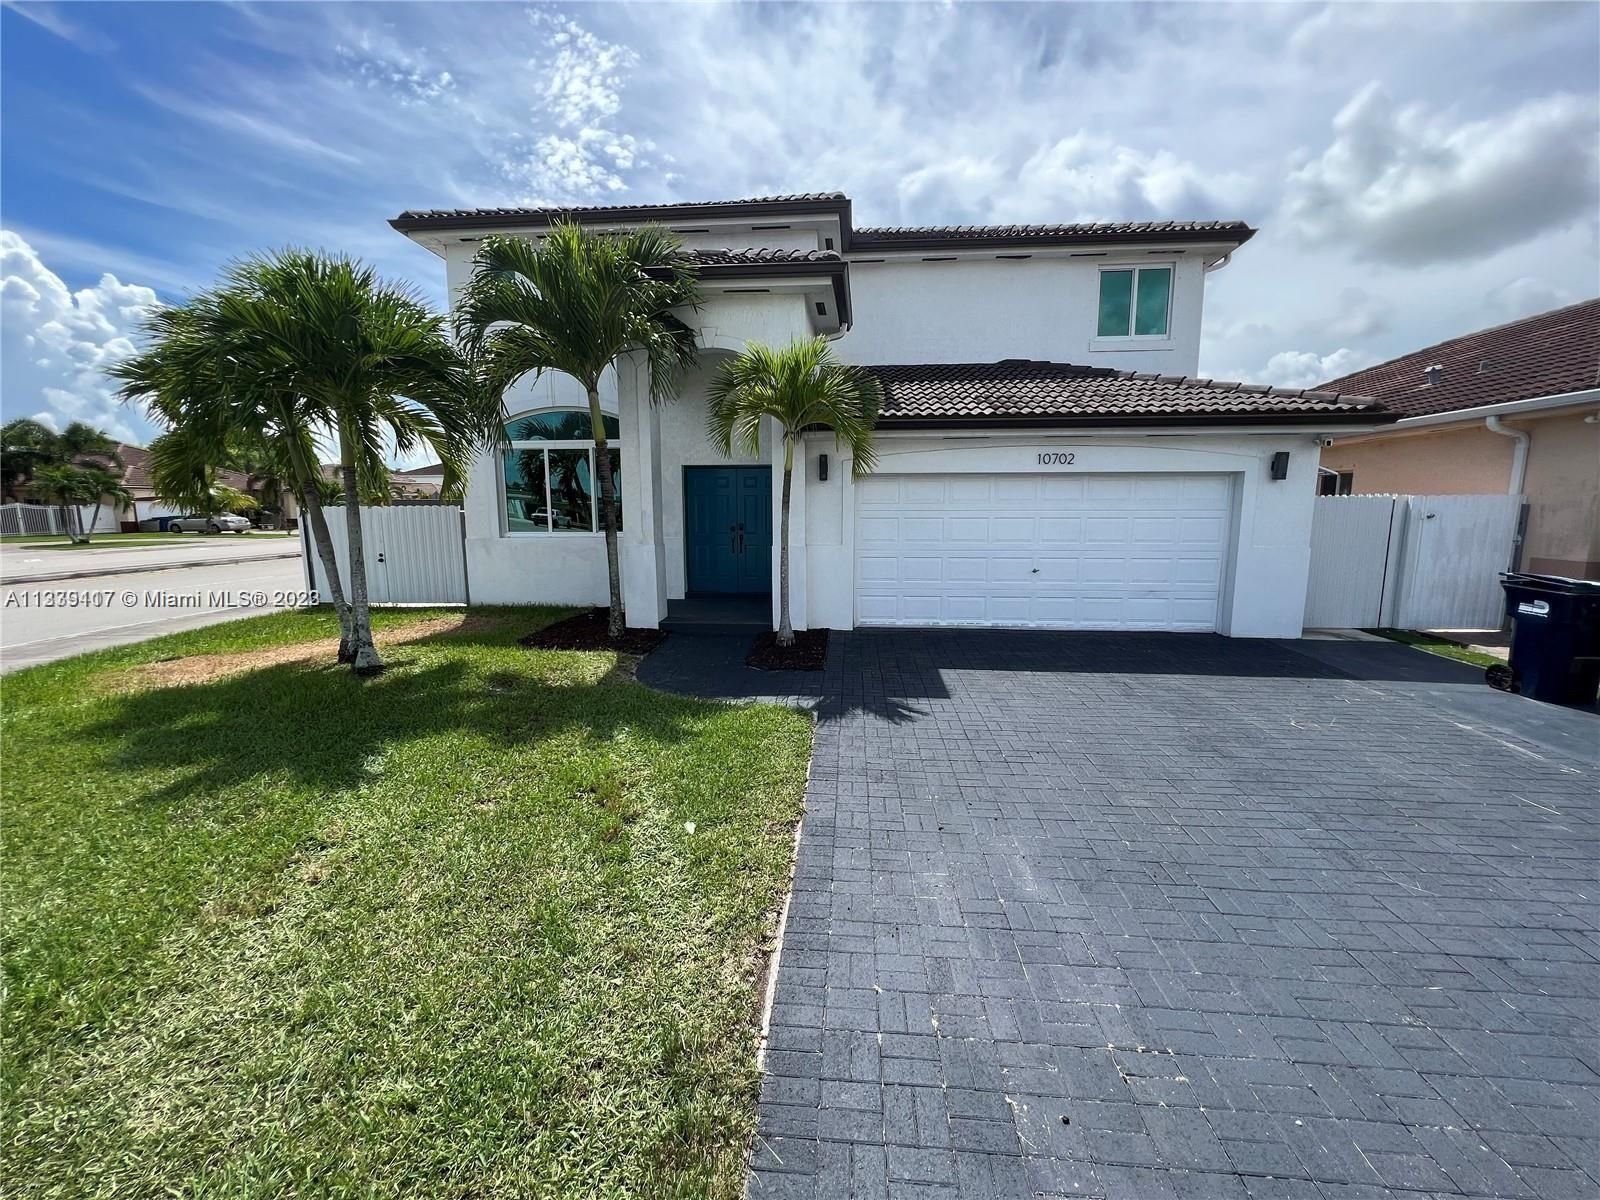 Real estate property located at 10702 228th Ter, Miami-Dade County, Miami, FL